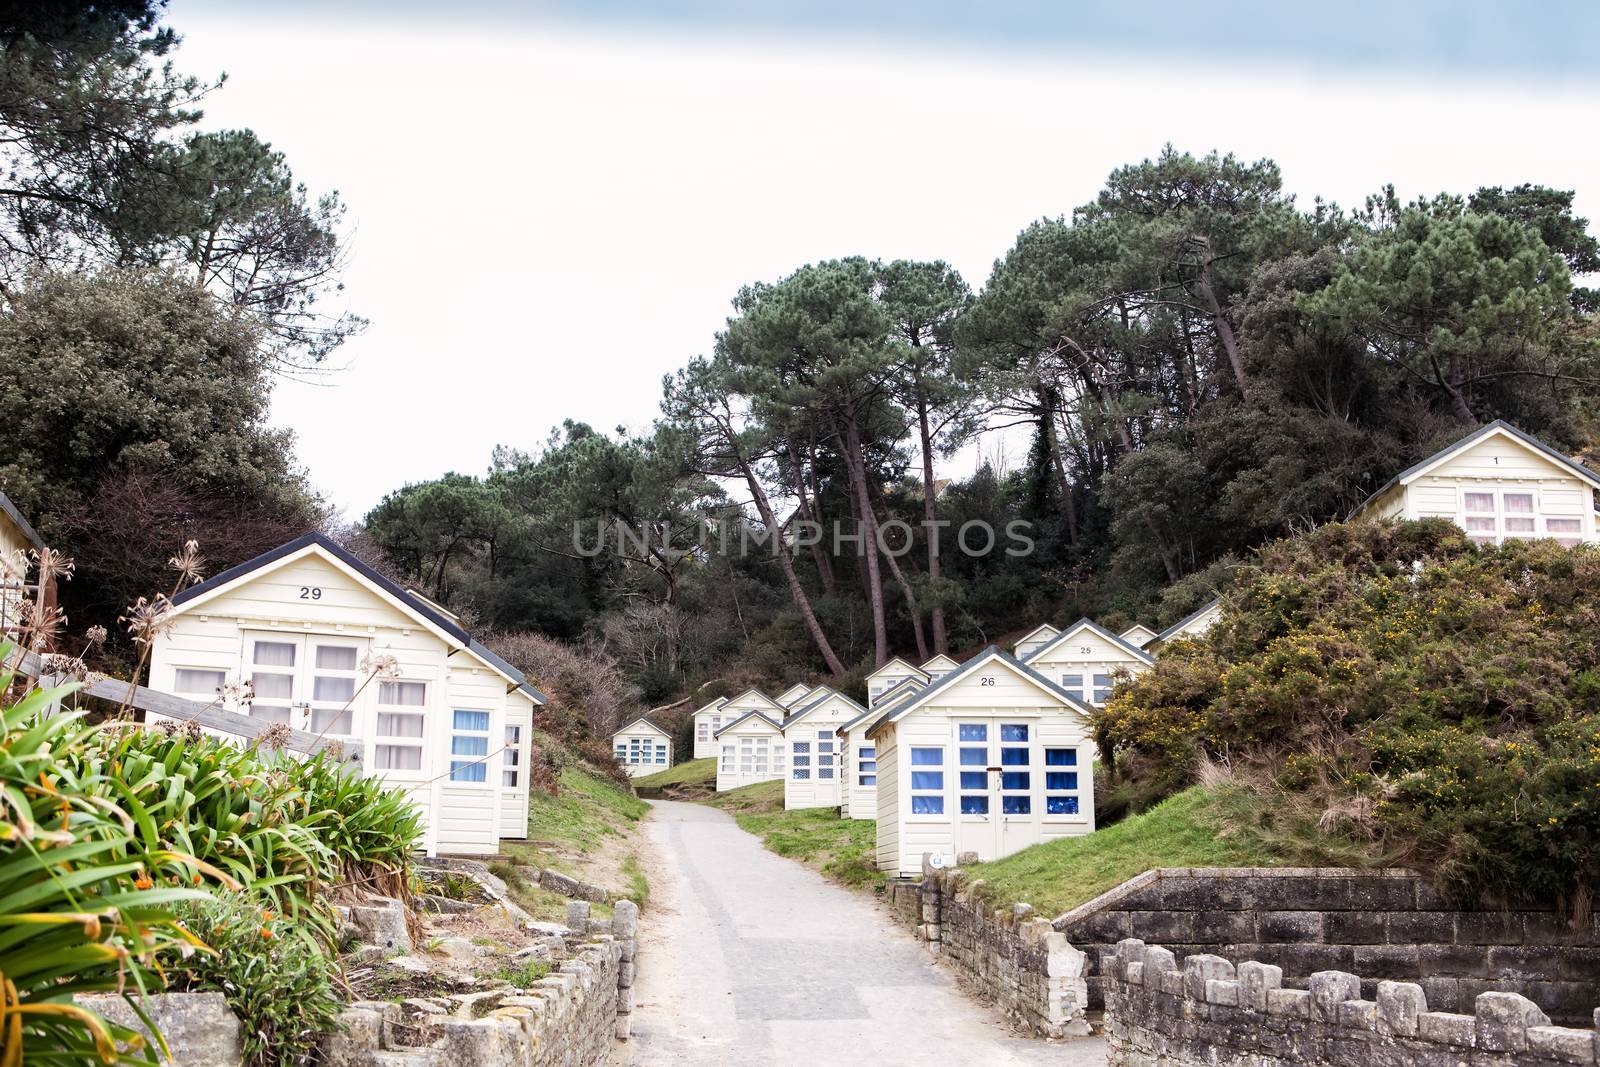 ENGLAND: Beach Huts on Bournemouth Beach by mitakag